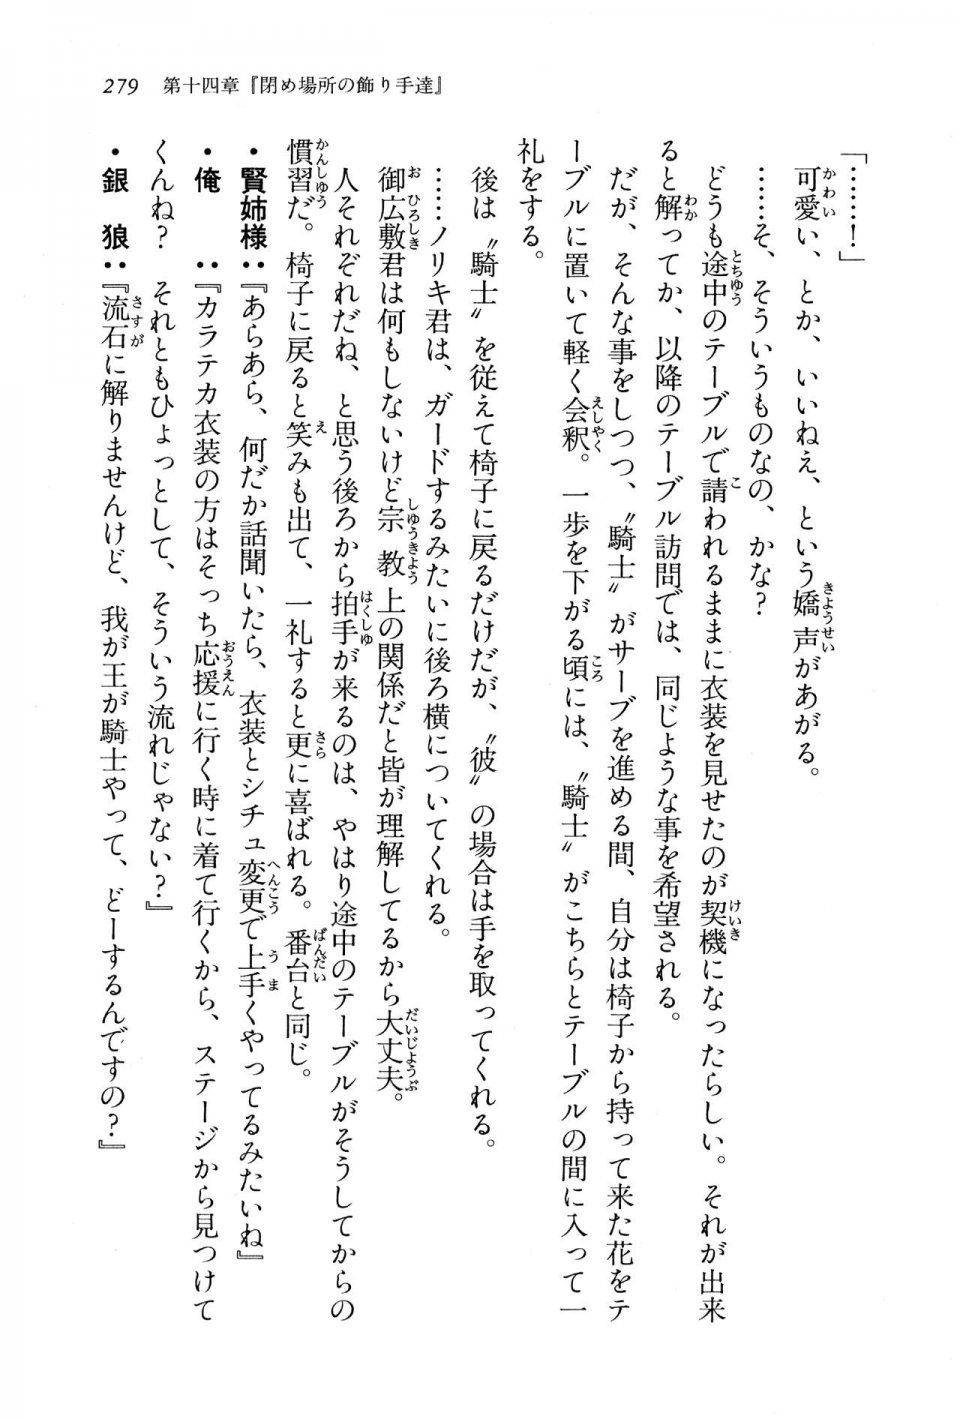 Kyoukai Senjou no Horizon BD Special Mininovel Vol 8(4B) - Photo #283